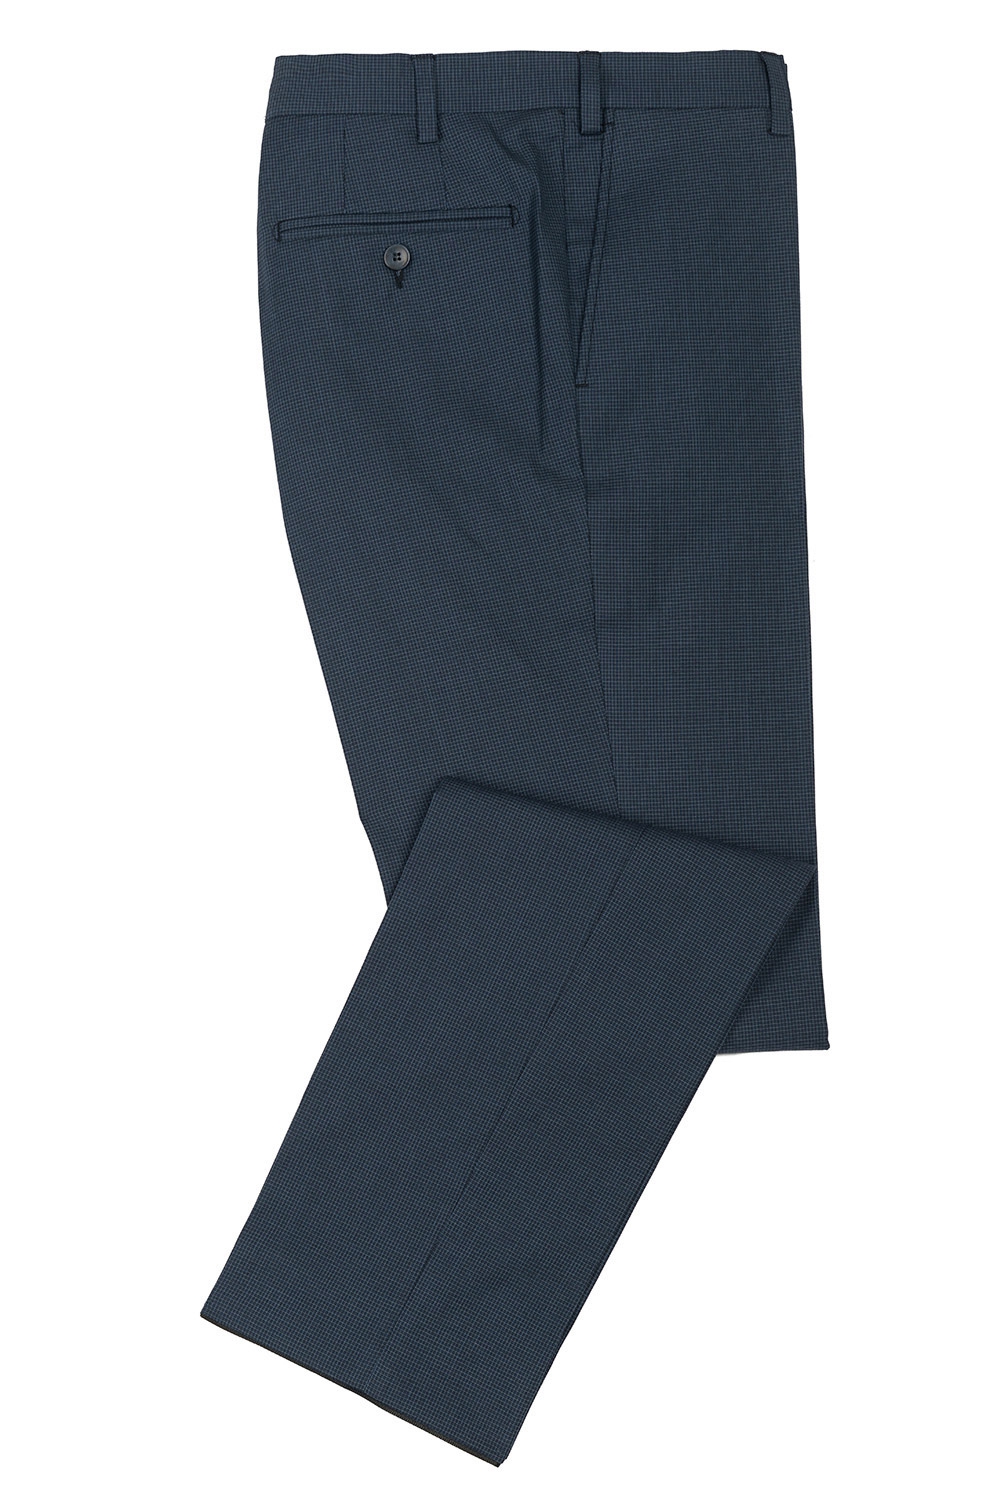 Pantaloni superslim fabian albastru in carouri 0